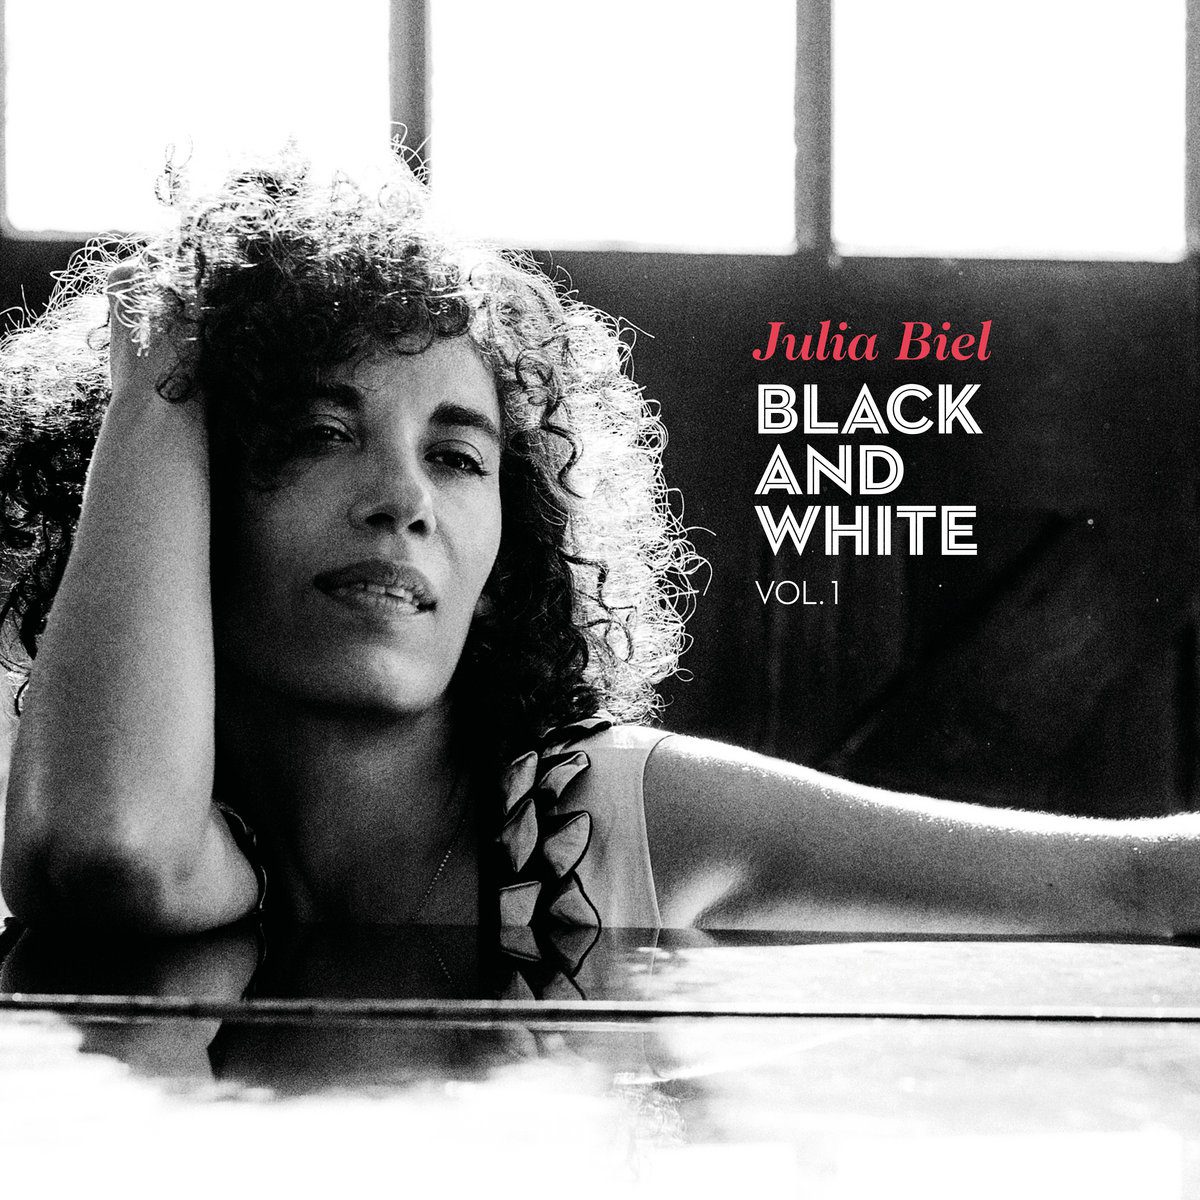 JULIA BIEL ‘BLACK AND WHITE VOL.1’